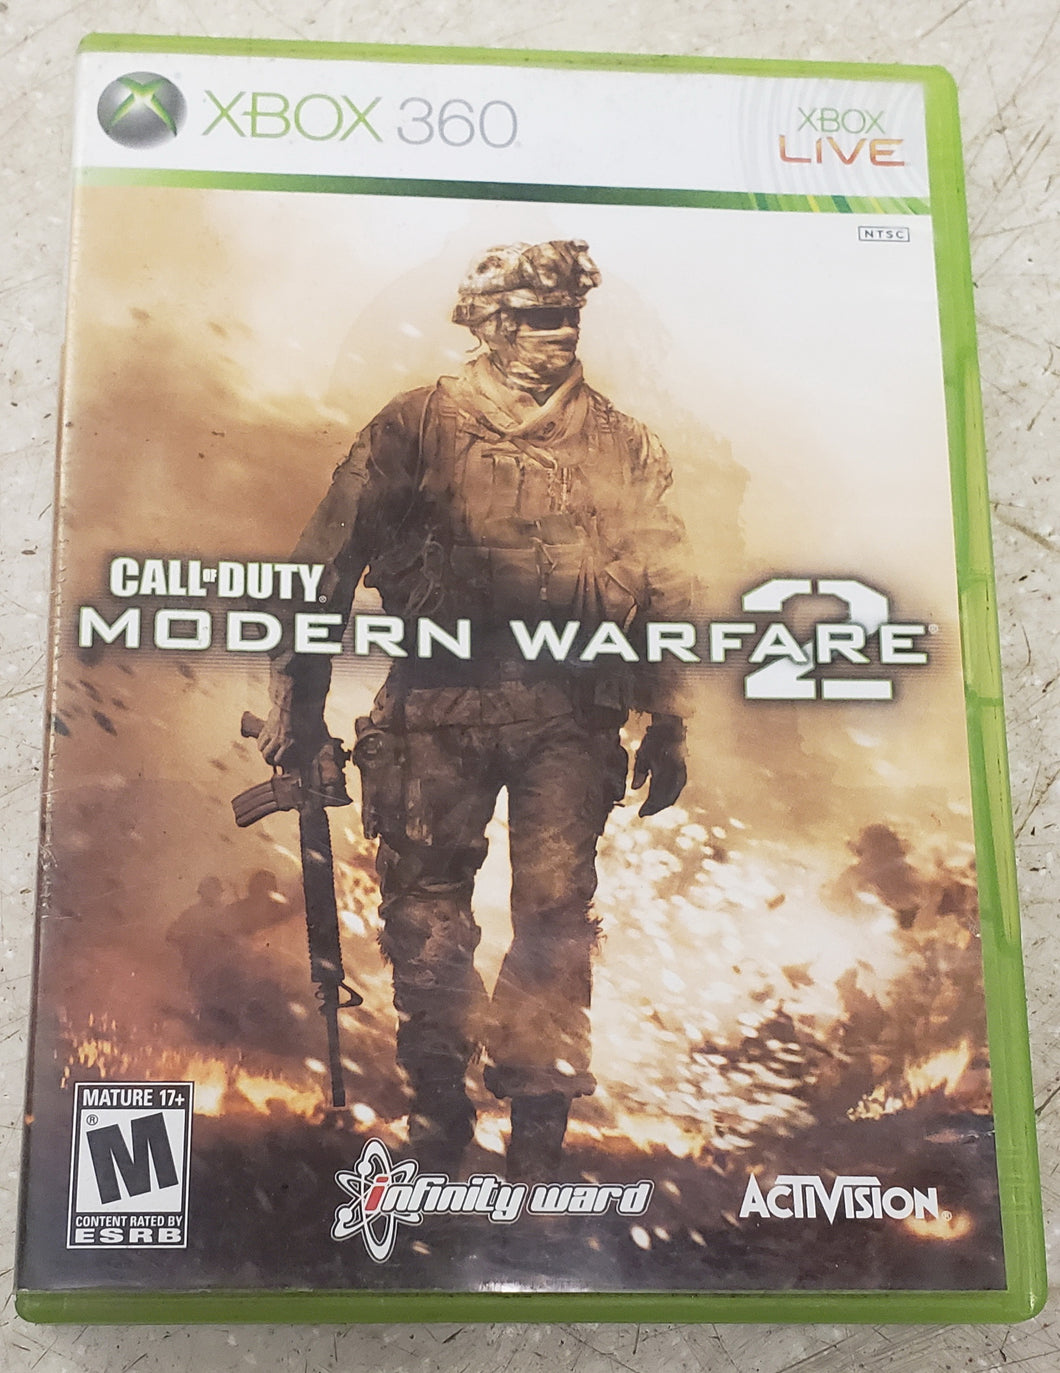 Call Of Duty Modern Warfare 2 Xbox 360 Game with Manual